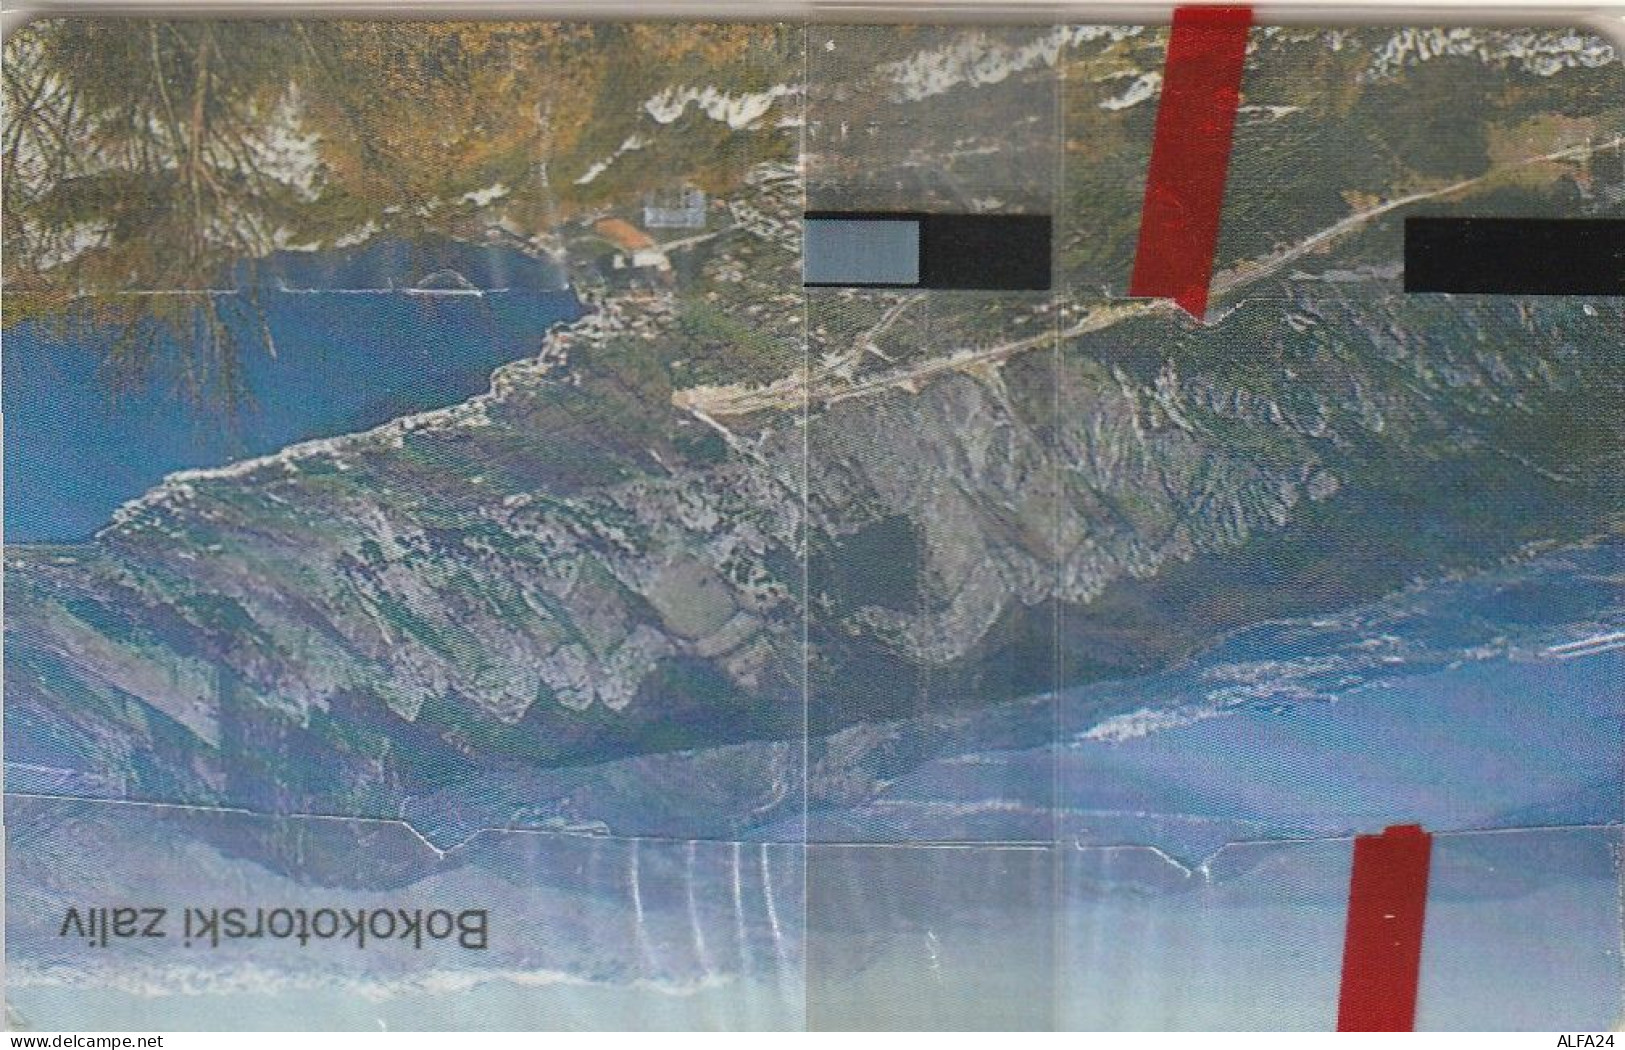 PHONE CARD MONTENEGRO BLISTER (E56.18.7 - Montenegro